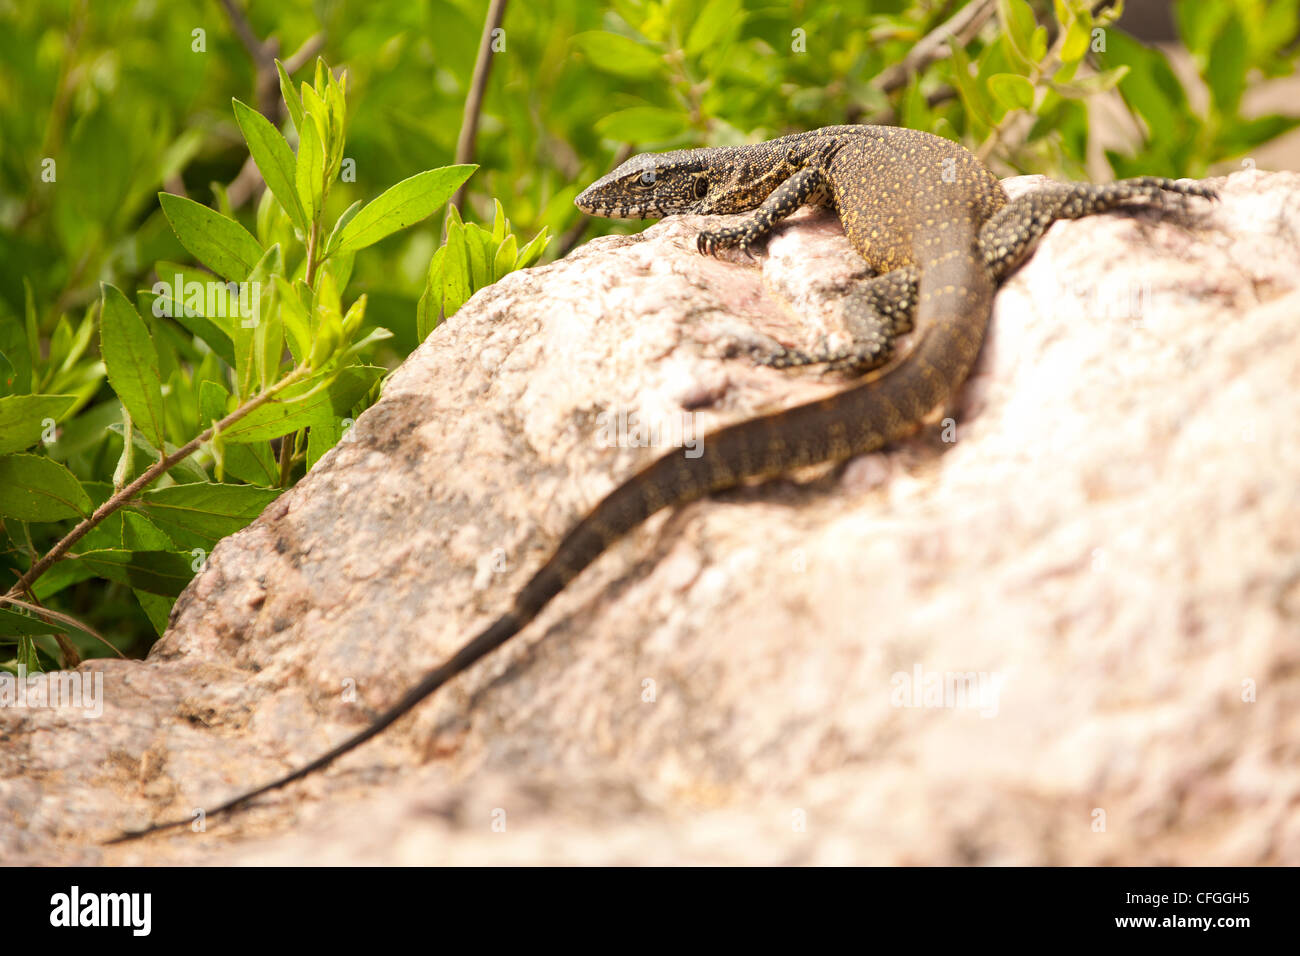 An African Water Monitor Lizard on a rock (Varanus salvator) Stock Photo